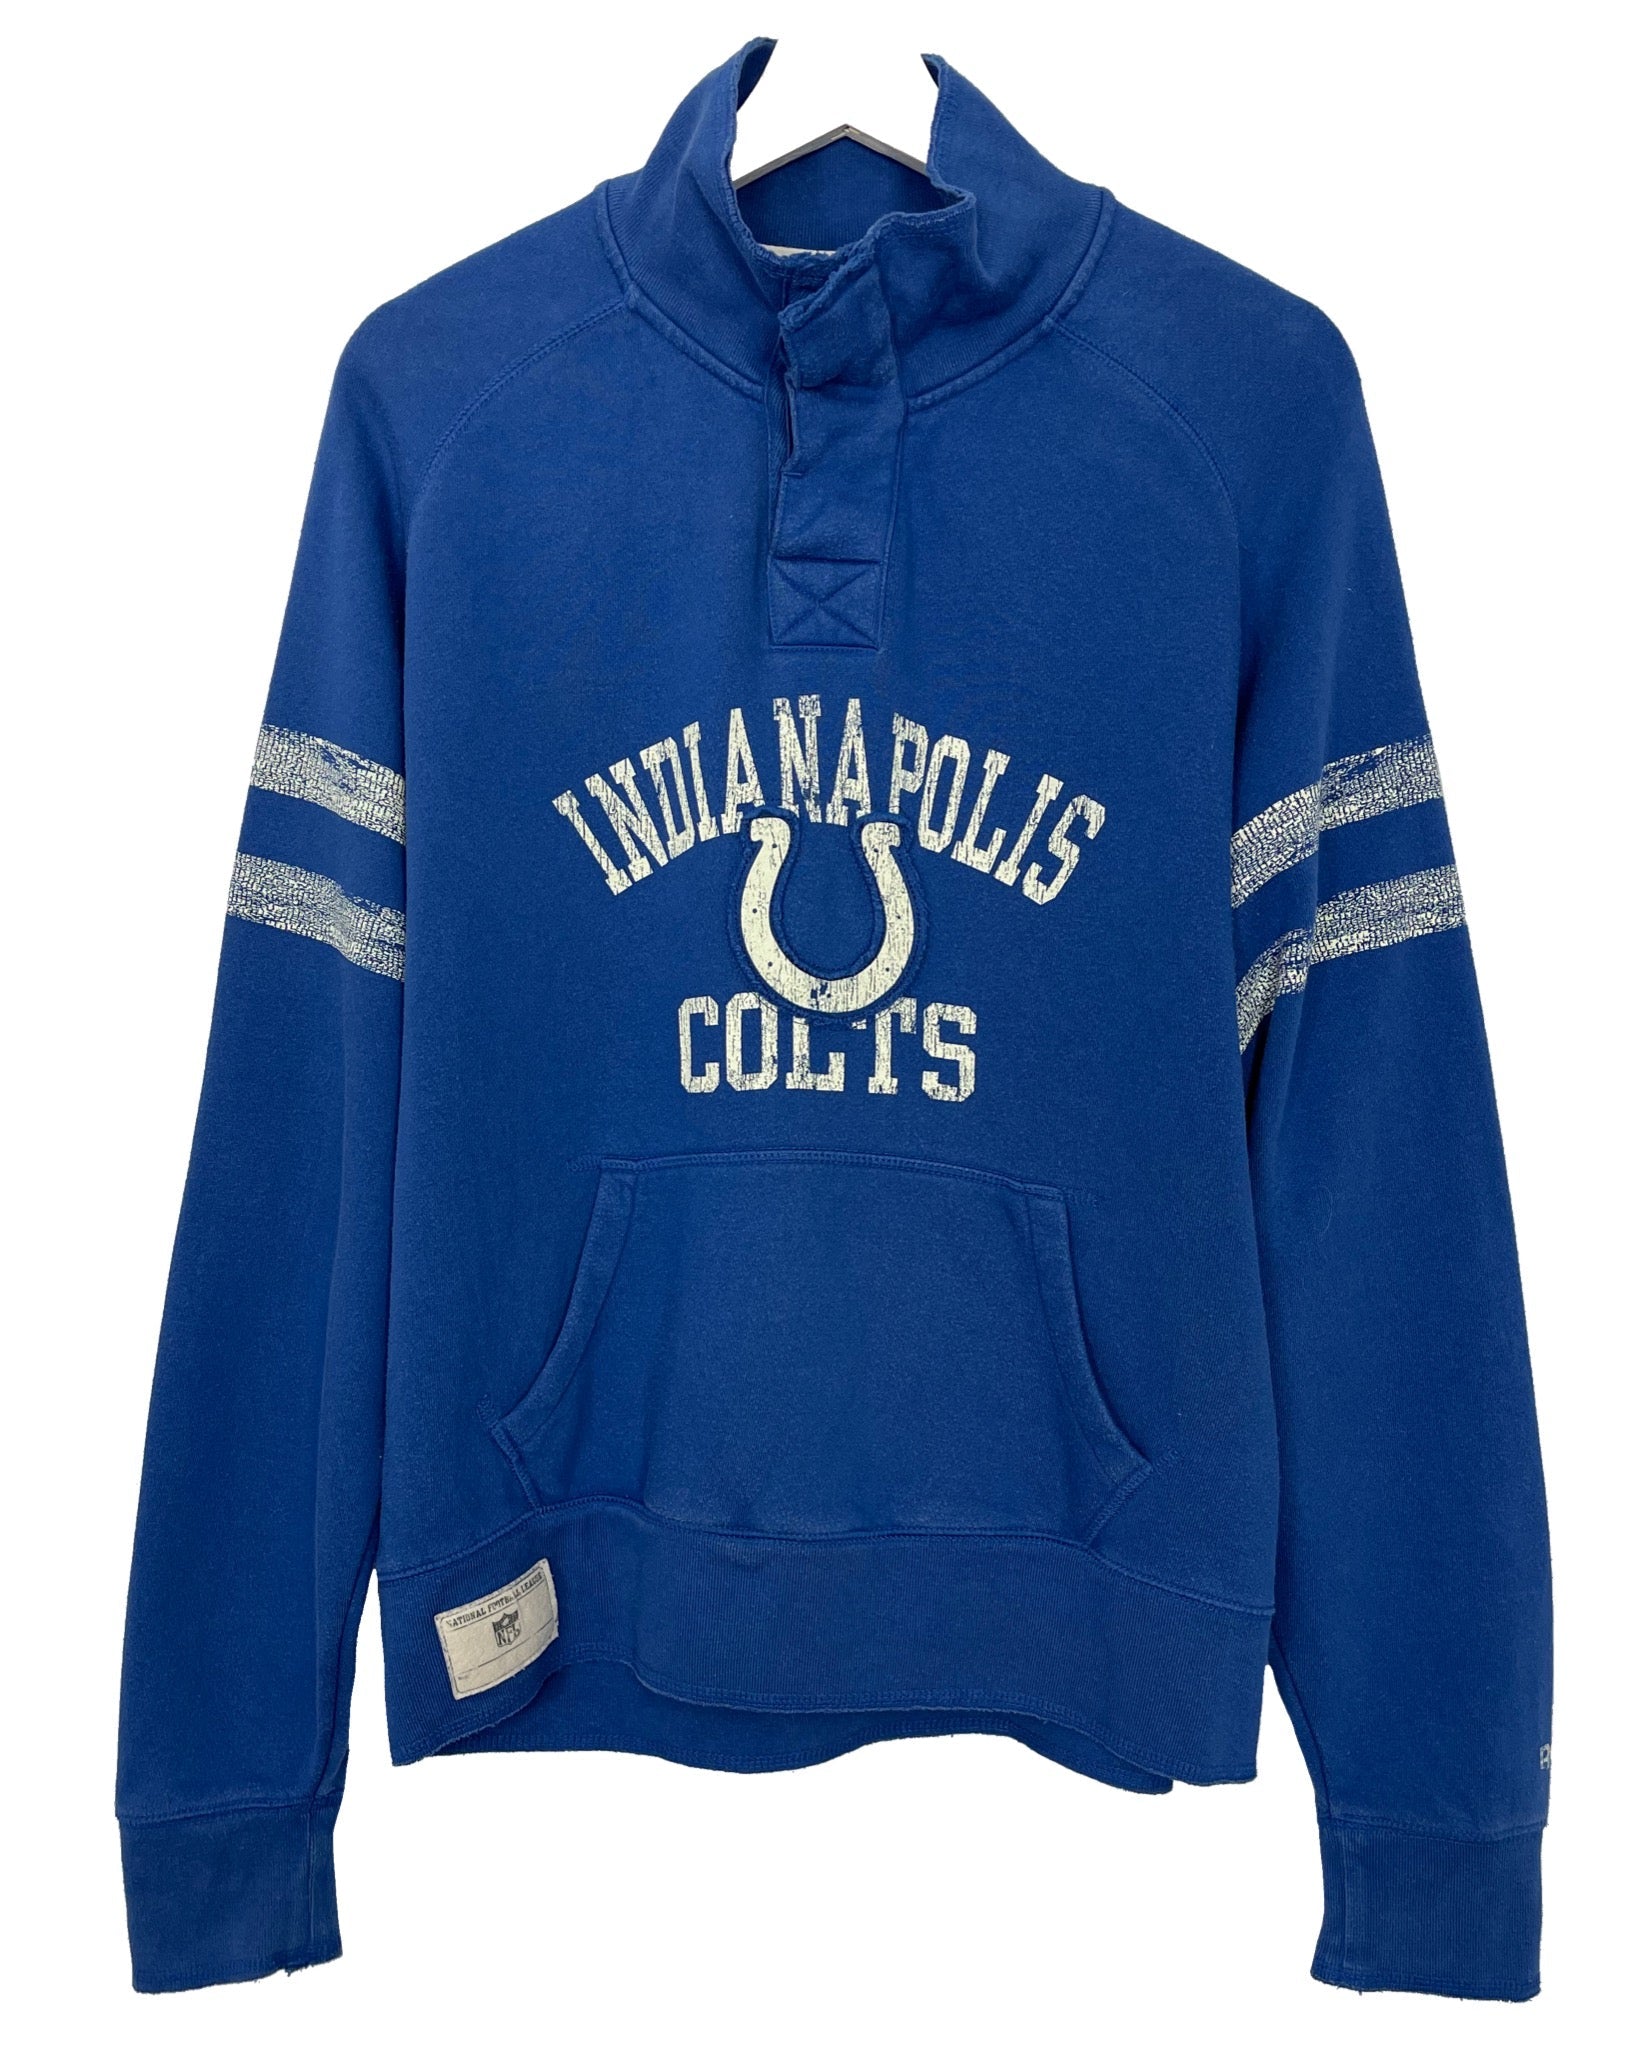  Sweatshirt Reebok Sweat - Indianapolis Colts - L - PLOMOSTORE